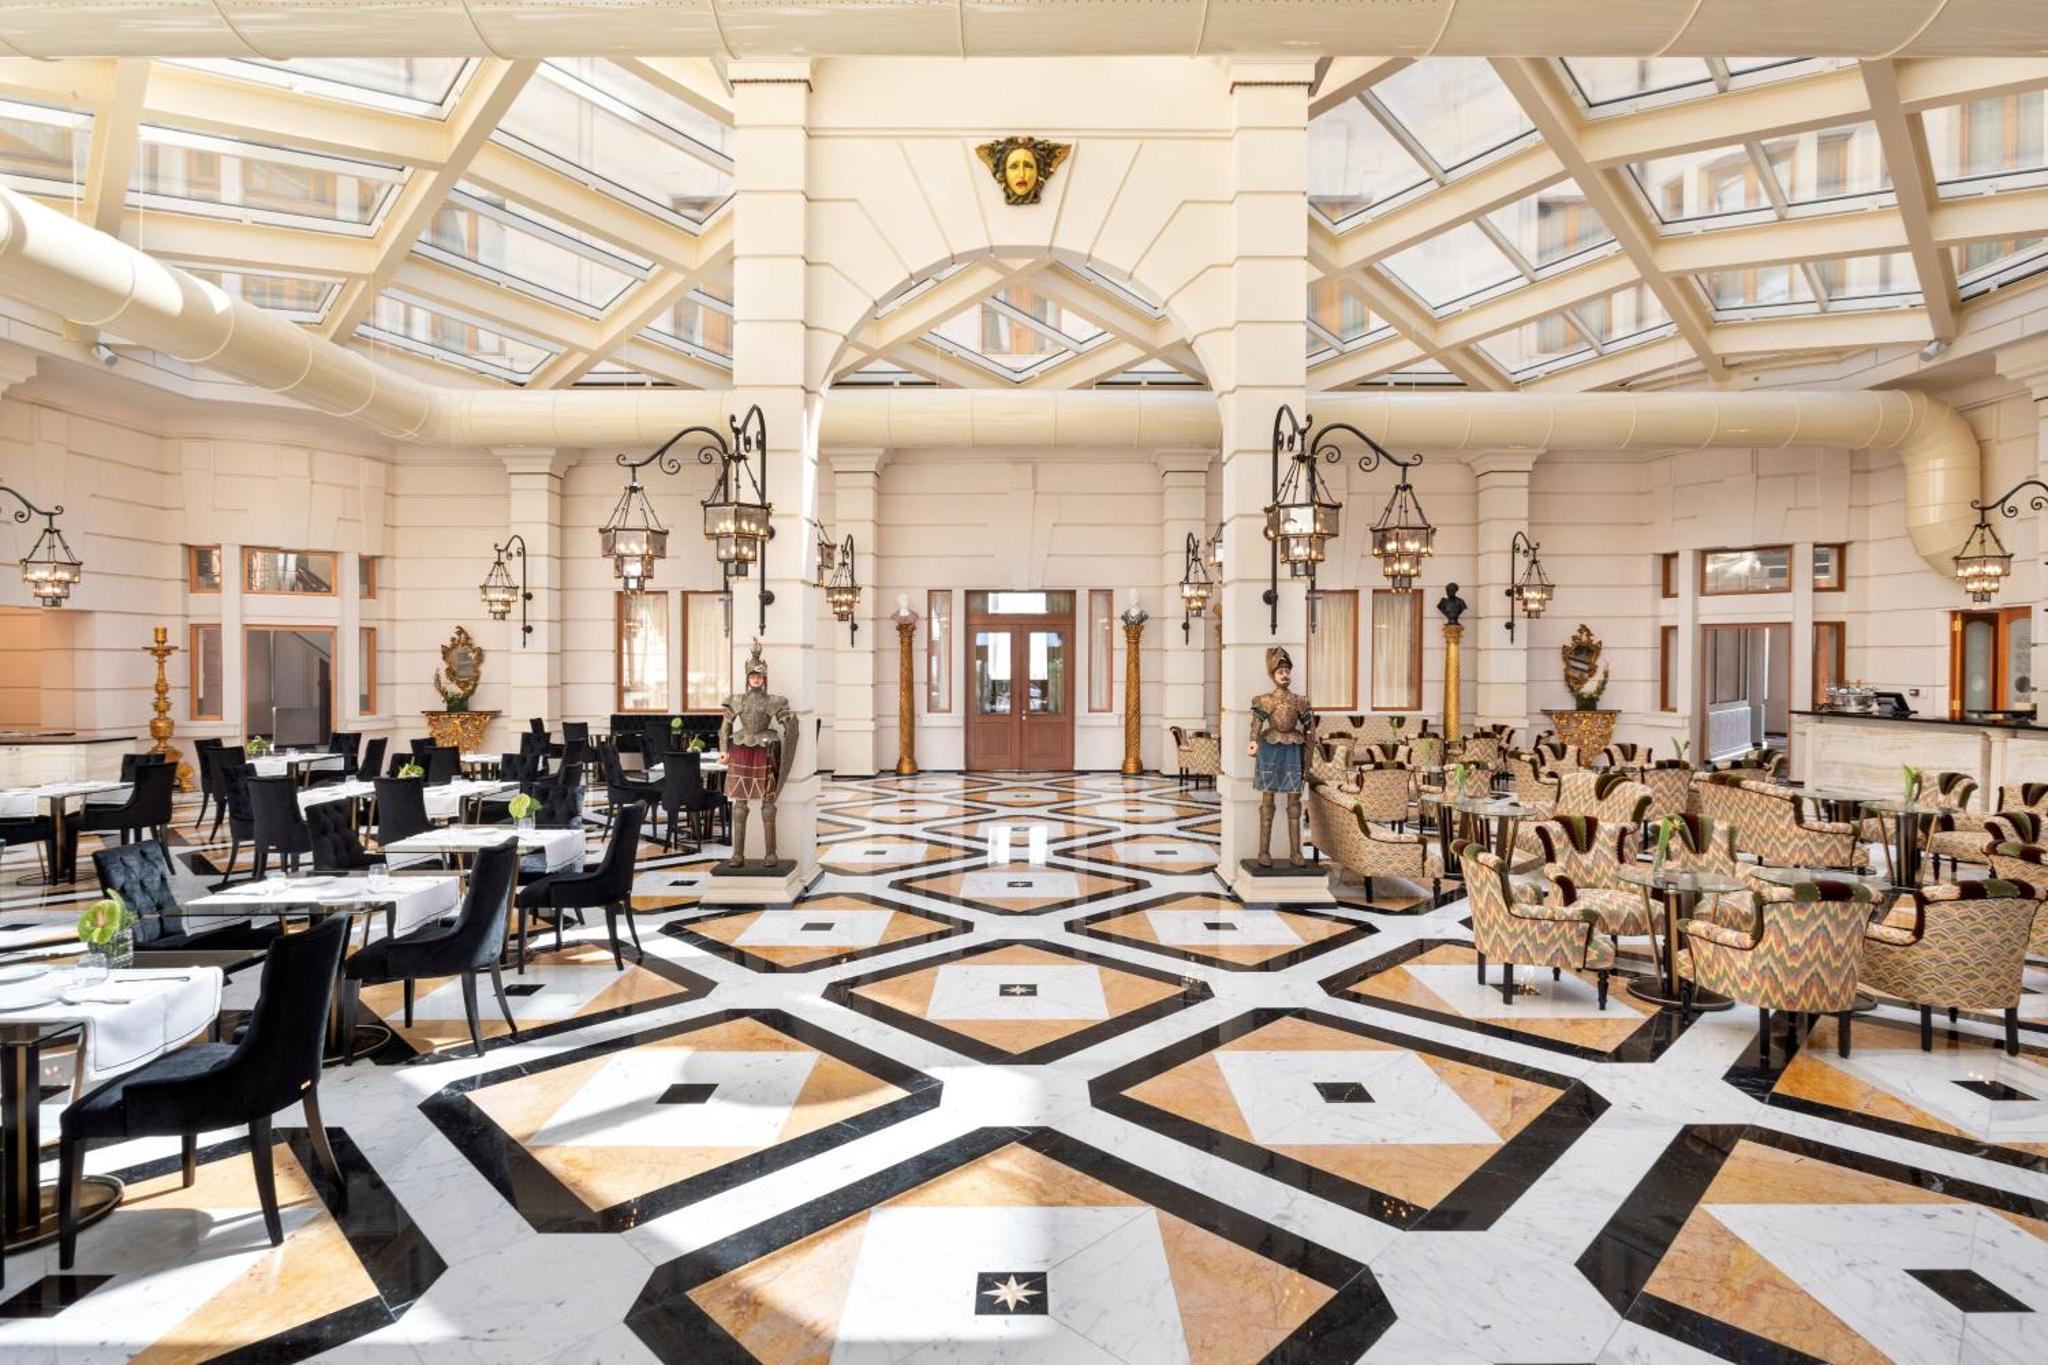 Ortea Palace Luxury Hotel